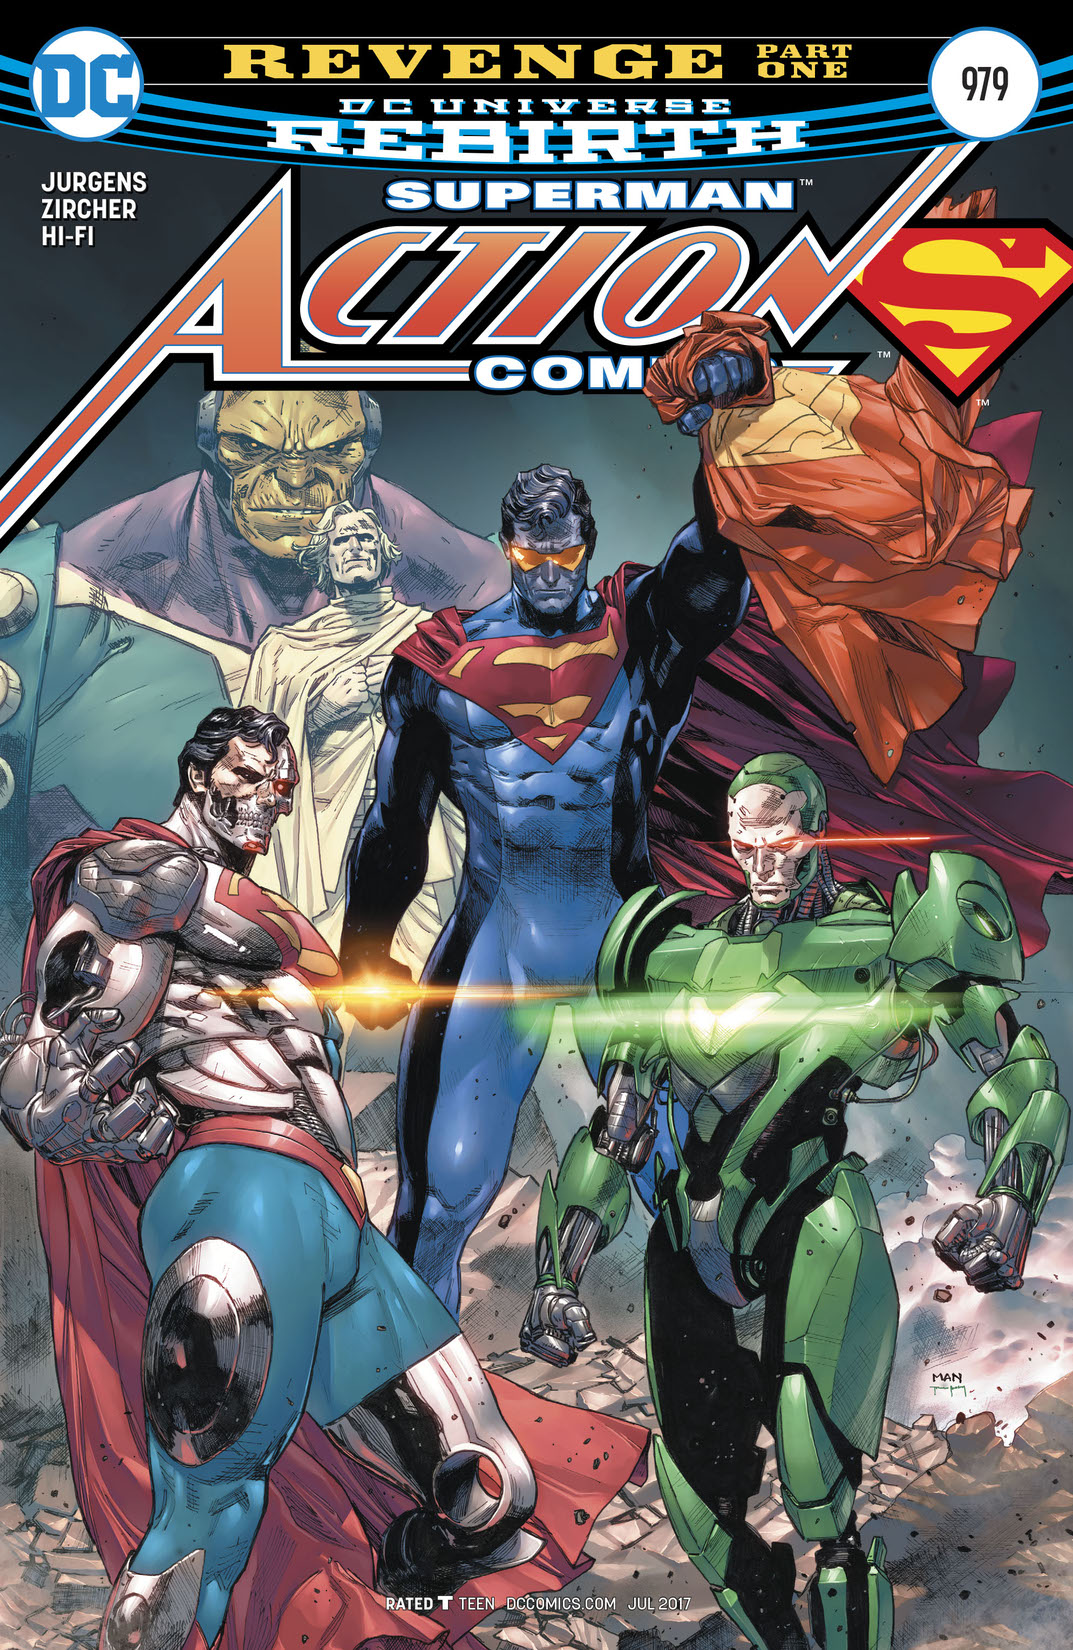 Action Comics (2016-) #979 preview images